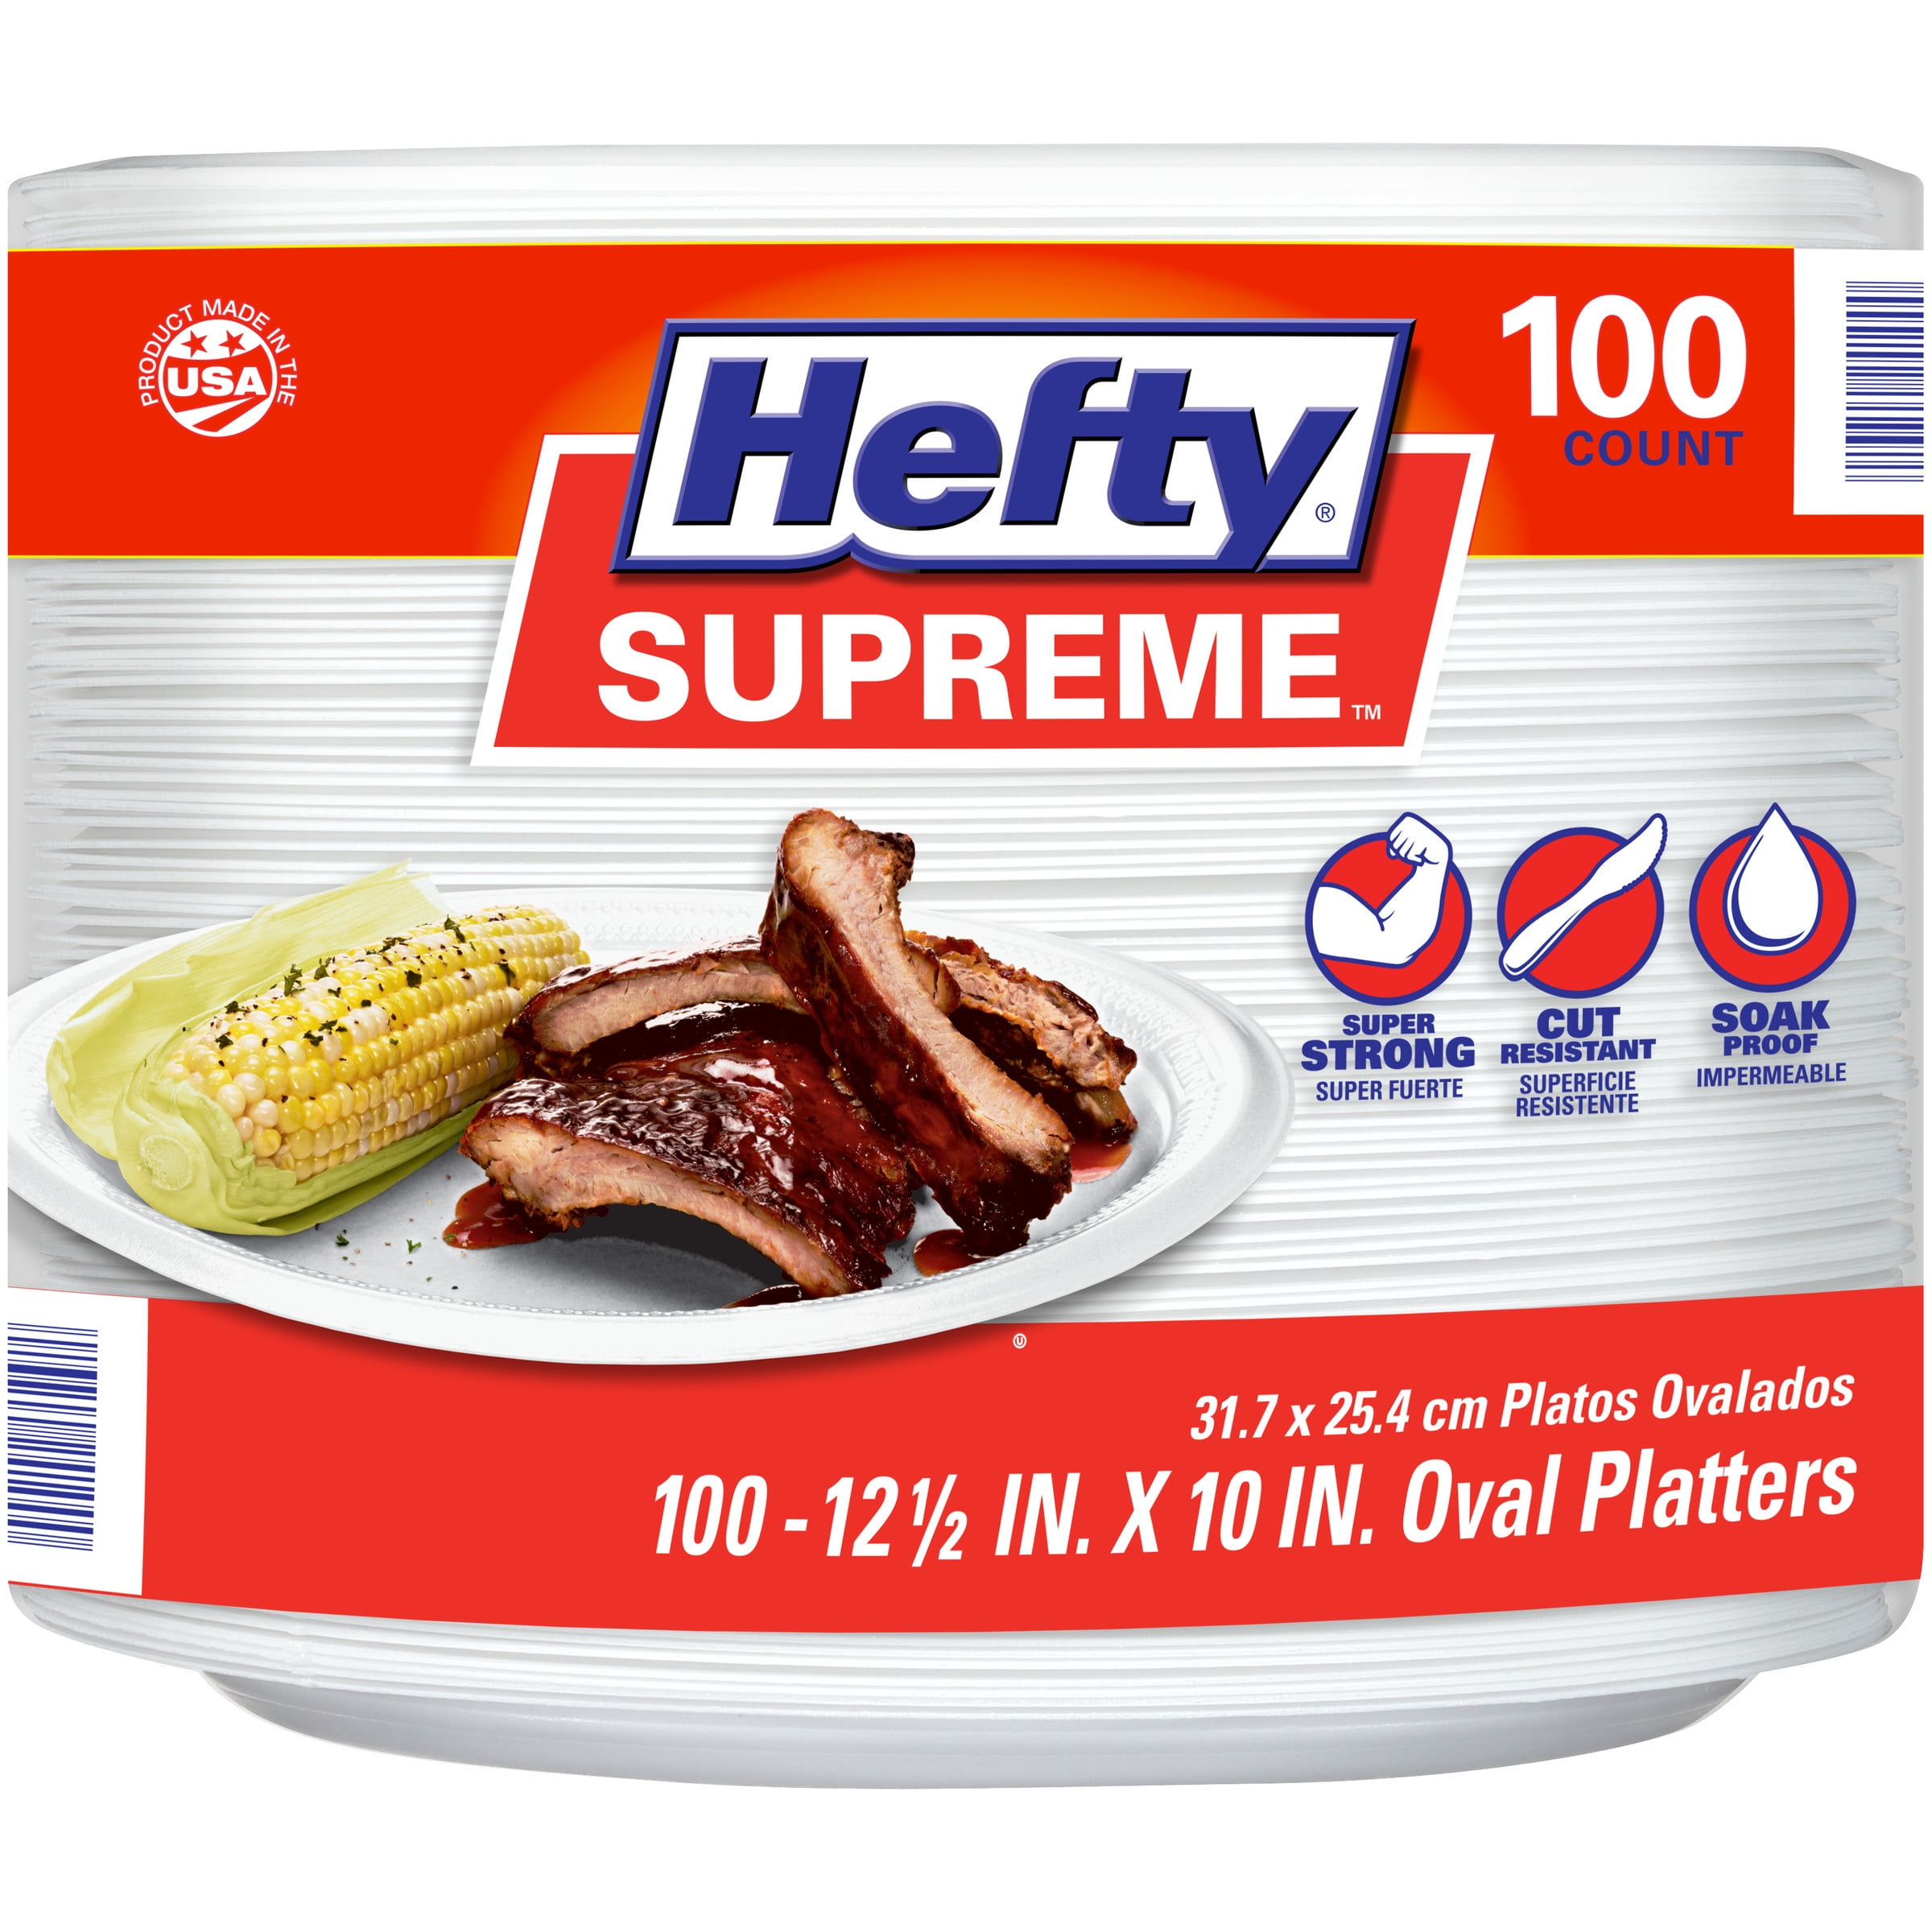 Hefty Supreme Plates (250 Ct.)